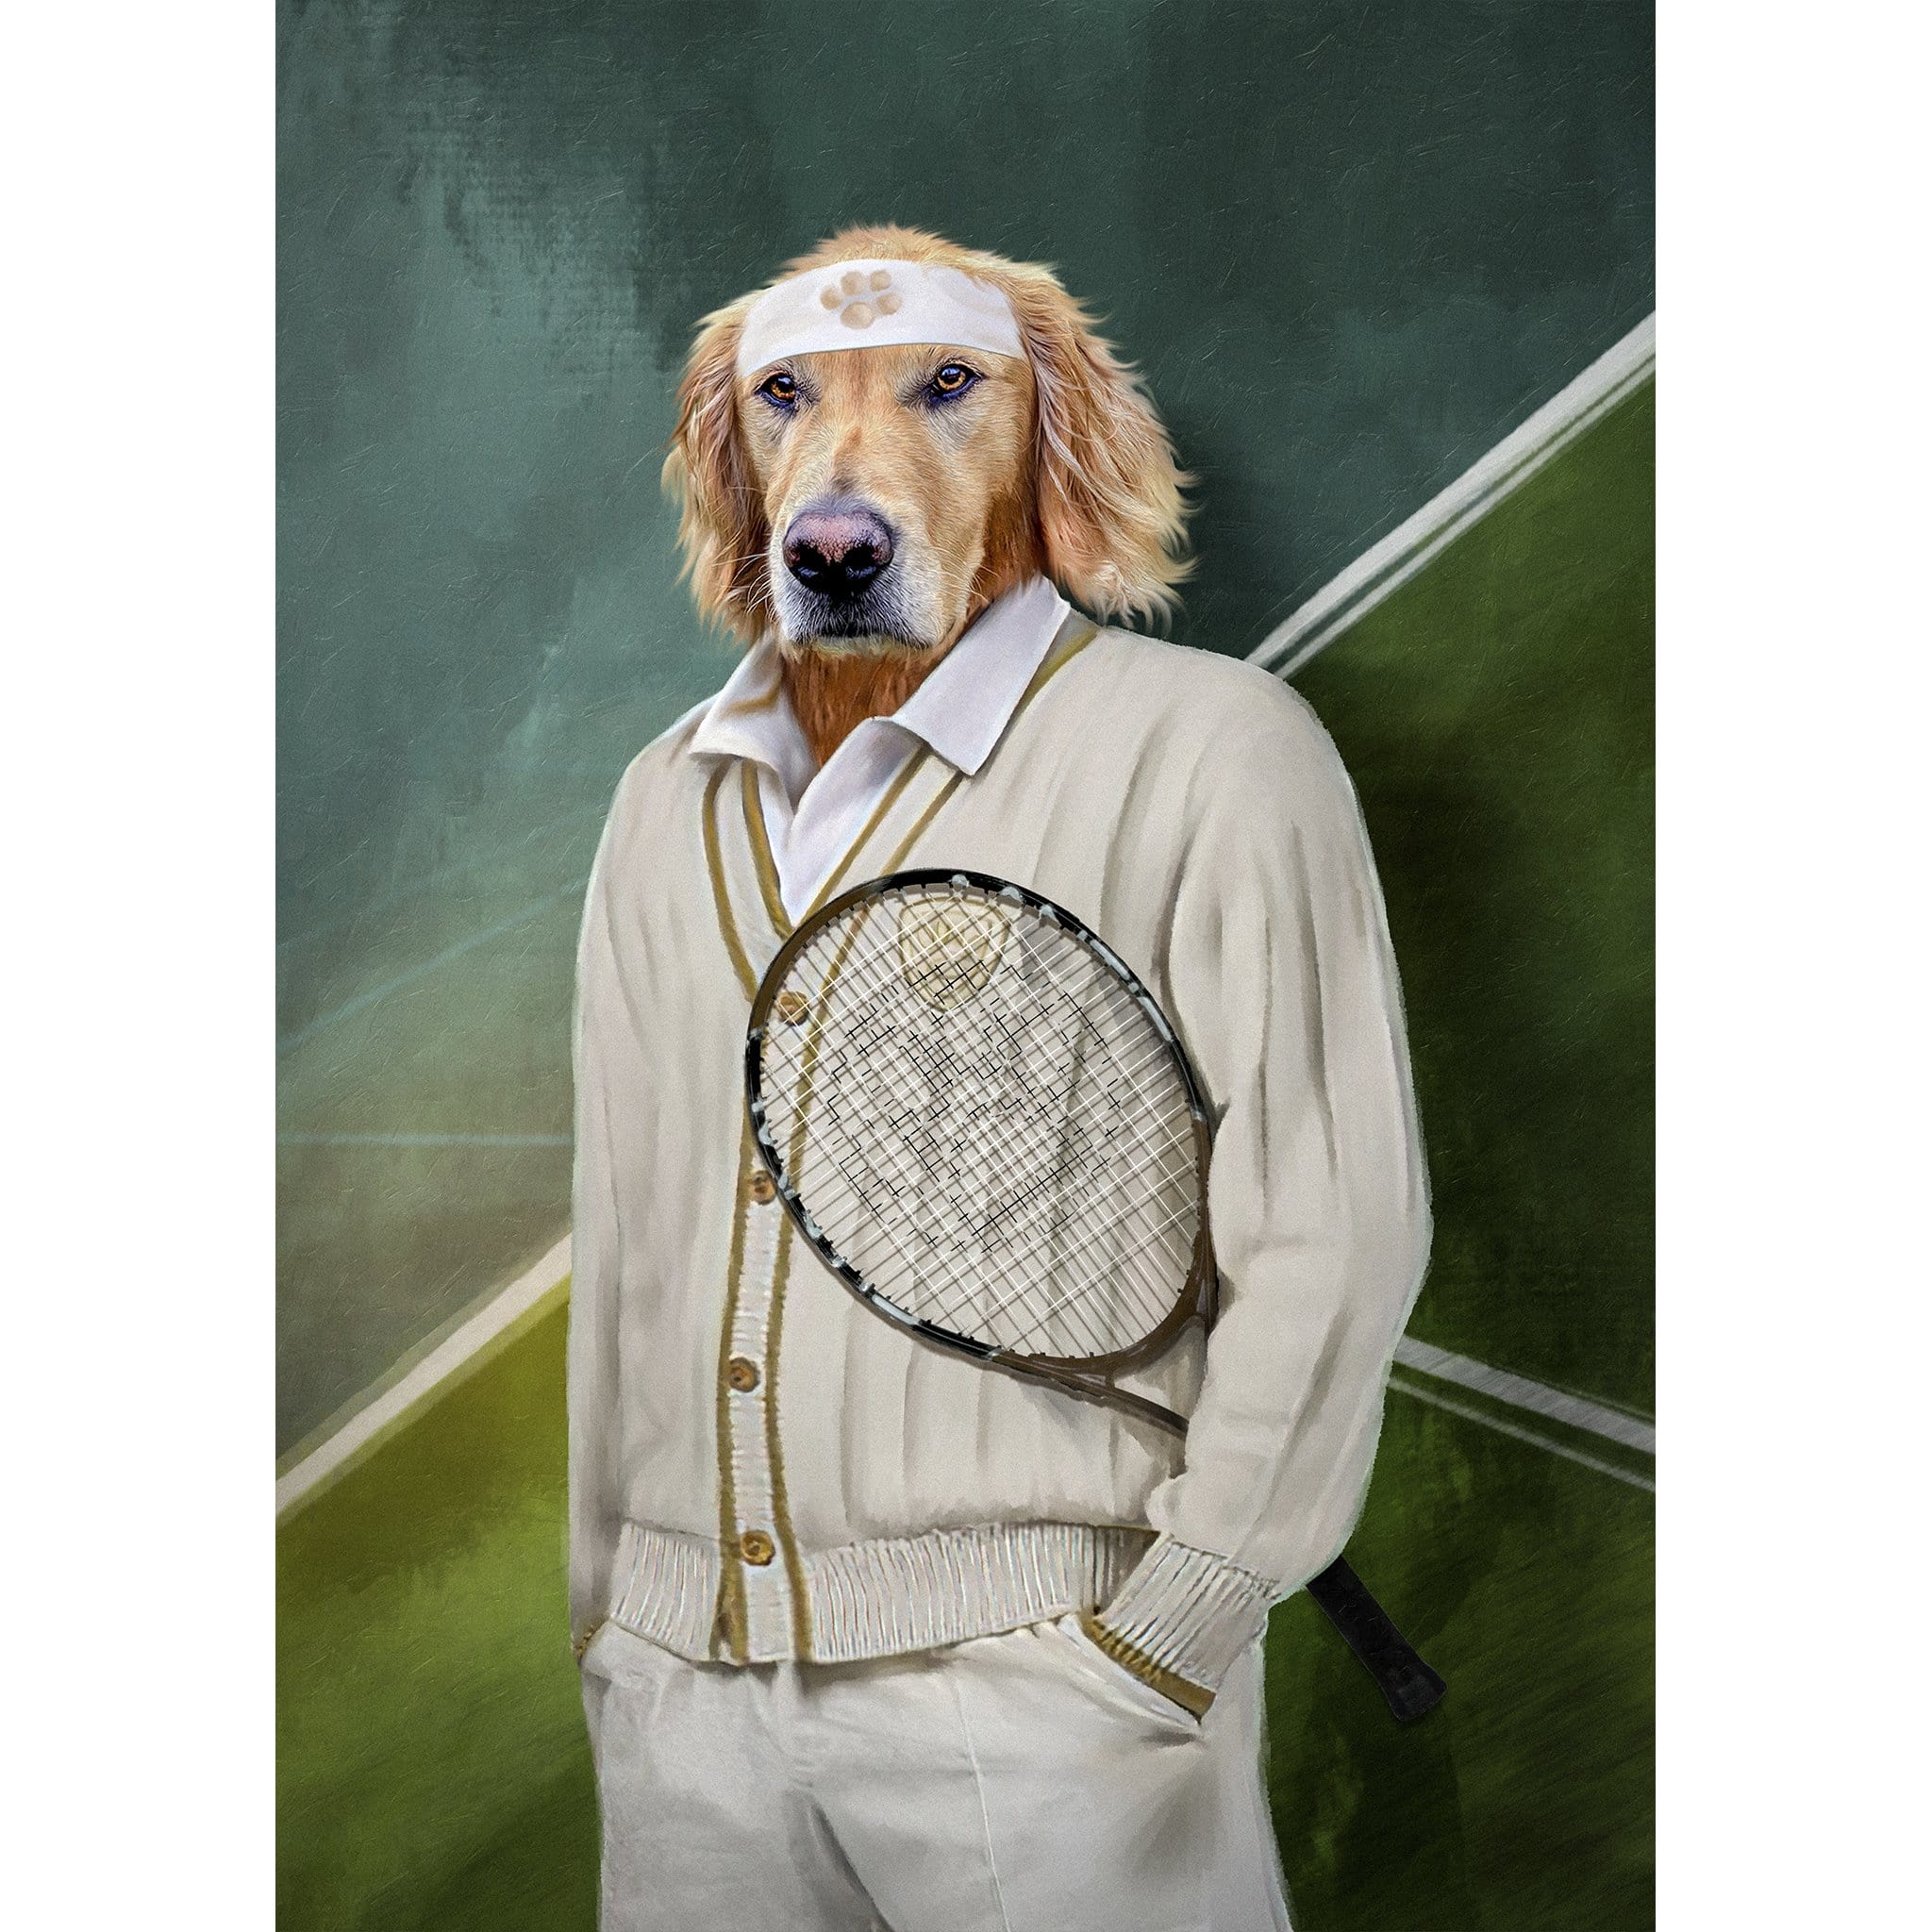 &#39;Tennis Player&#39; Digital Portrait